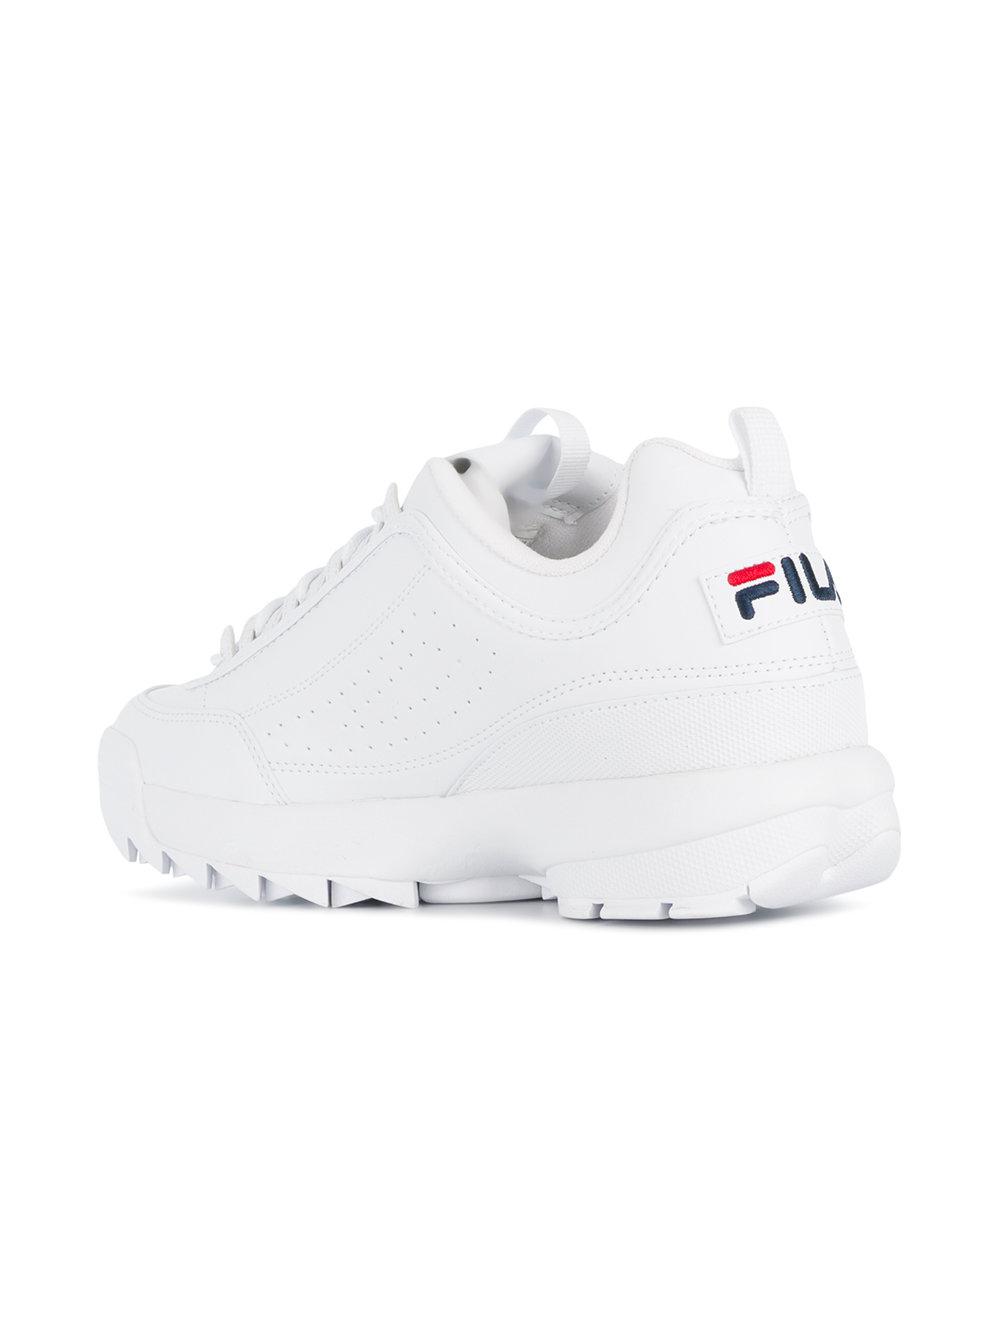 Fila Synthetic Sole Sneakers in White - Lyst